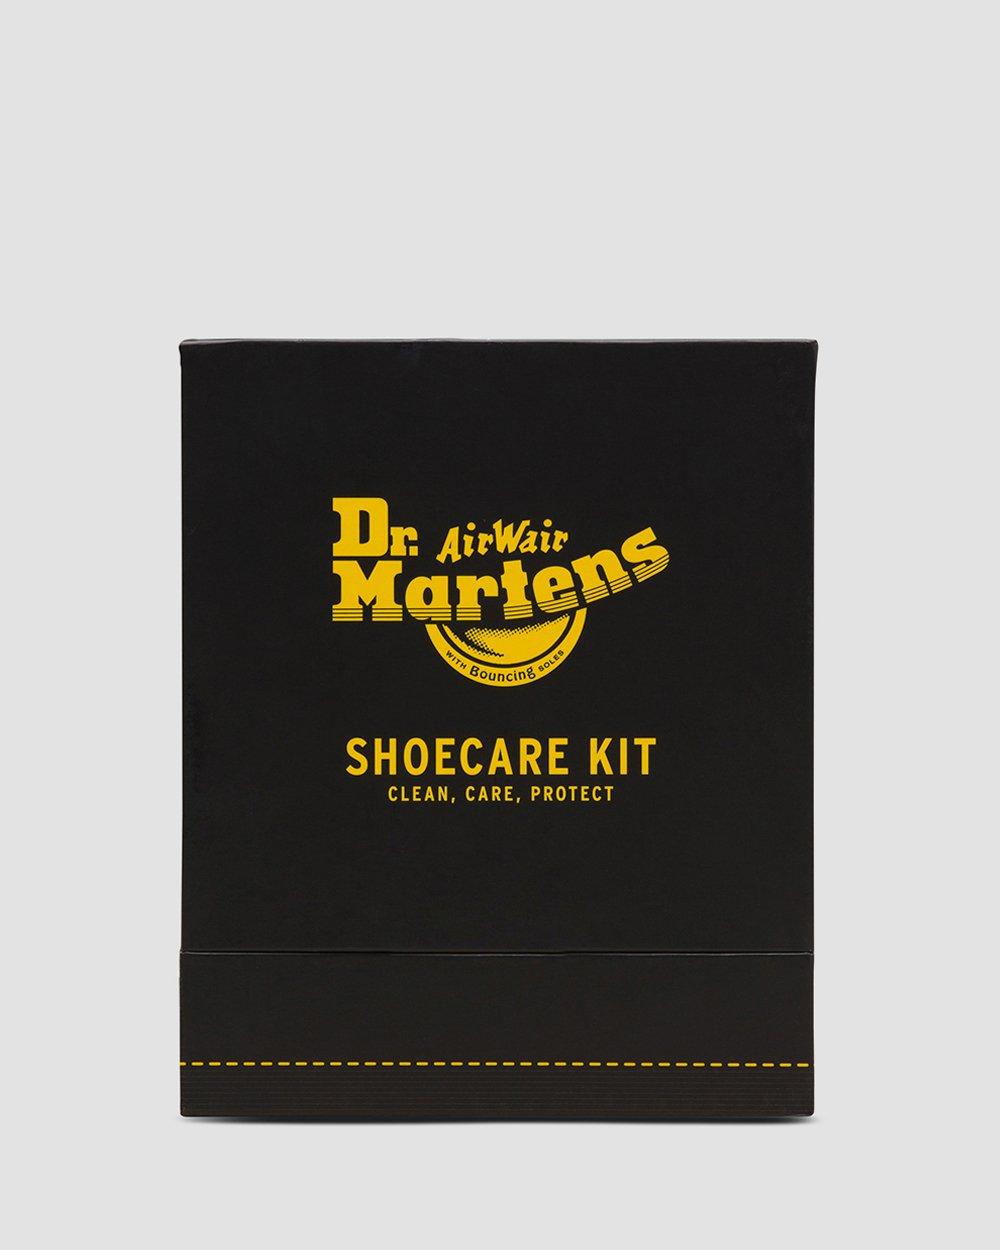 Premium Shoecare Kit in Black